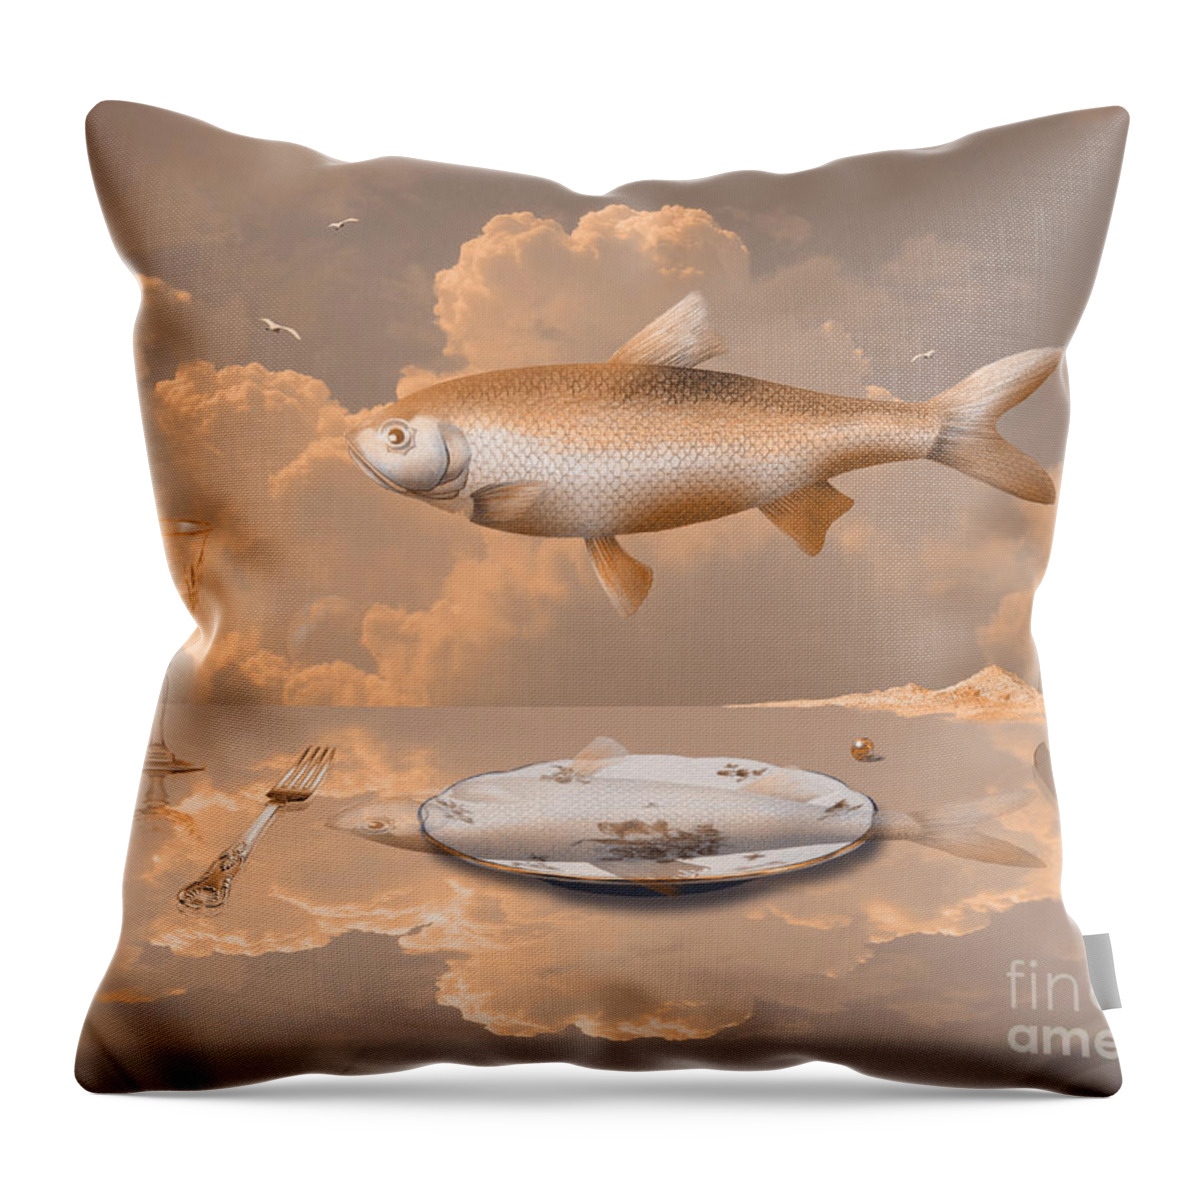 Fish Throw Pillow featuring the digital art Fish Diner by Alexa Szlavics